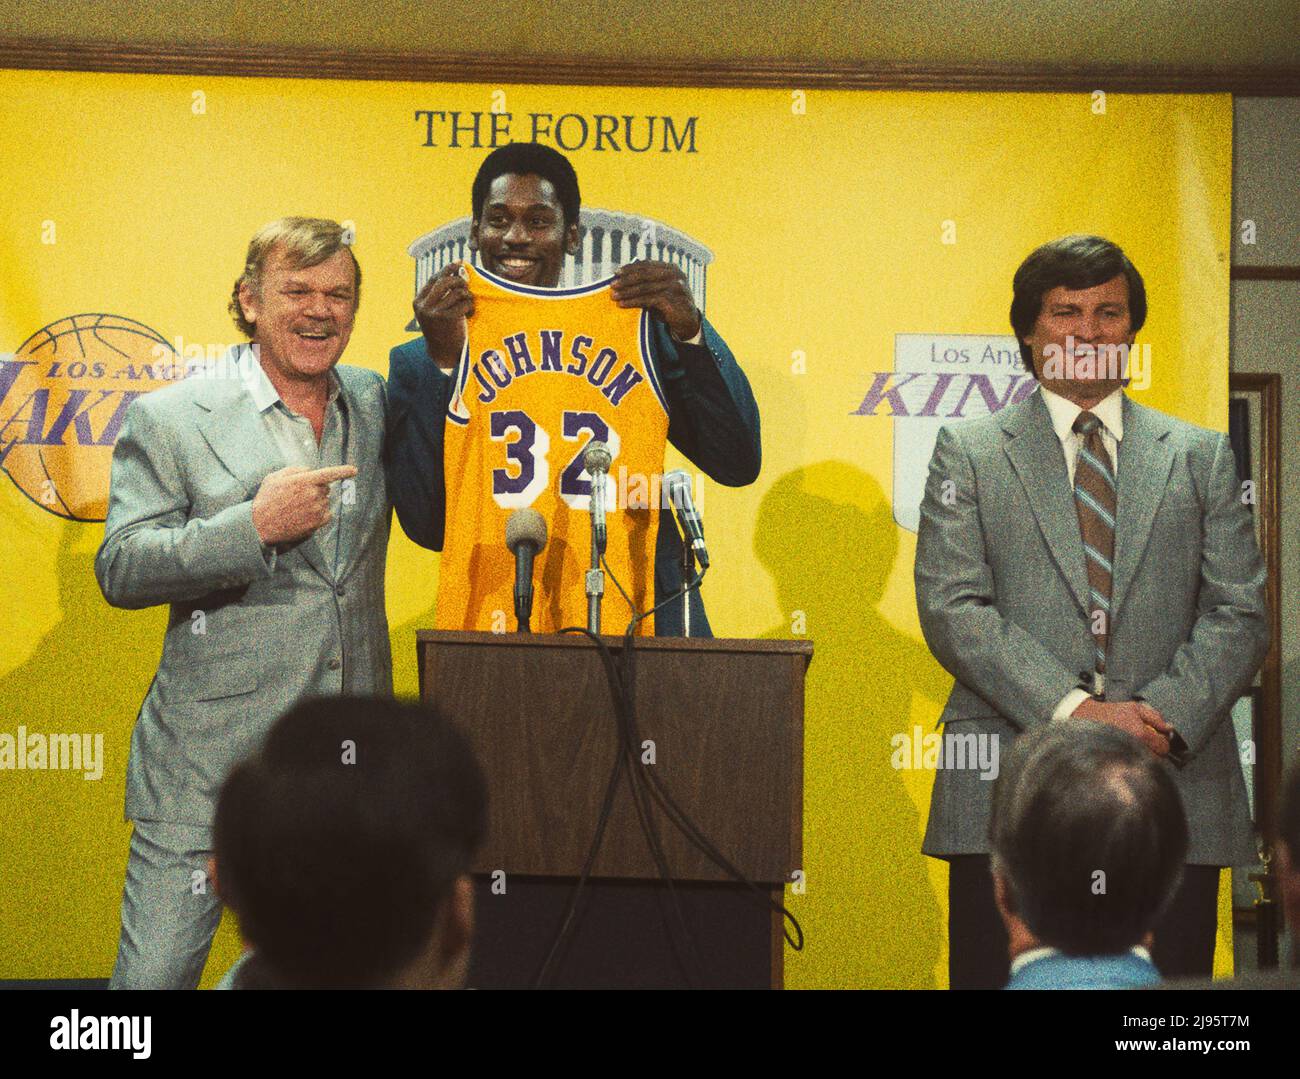 Tempo di vittoria: L'ascesa della Dinastia Lakers (serie TV): John C. Reilly come Jerry Bus, Quincy Isaiah come Magic Johnson, Jason Clarke come Jerry West Foto Stock